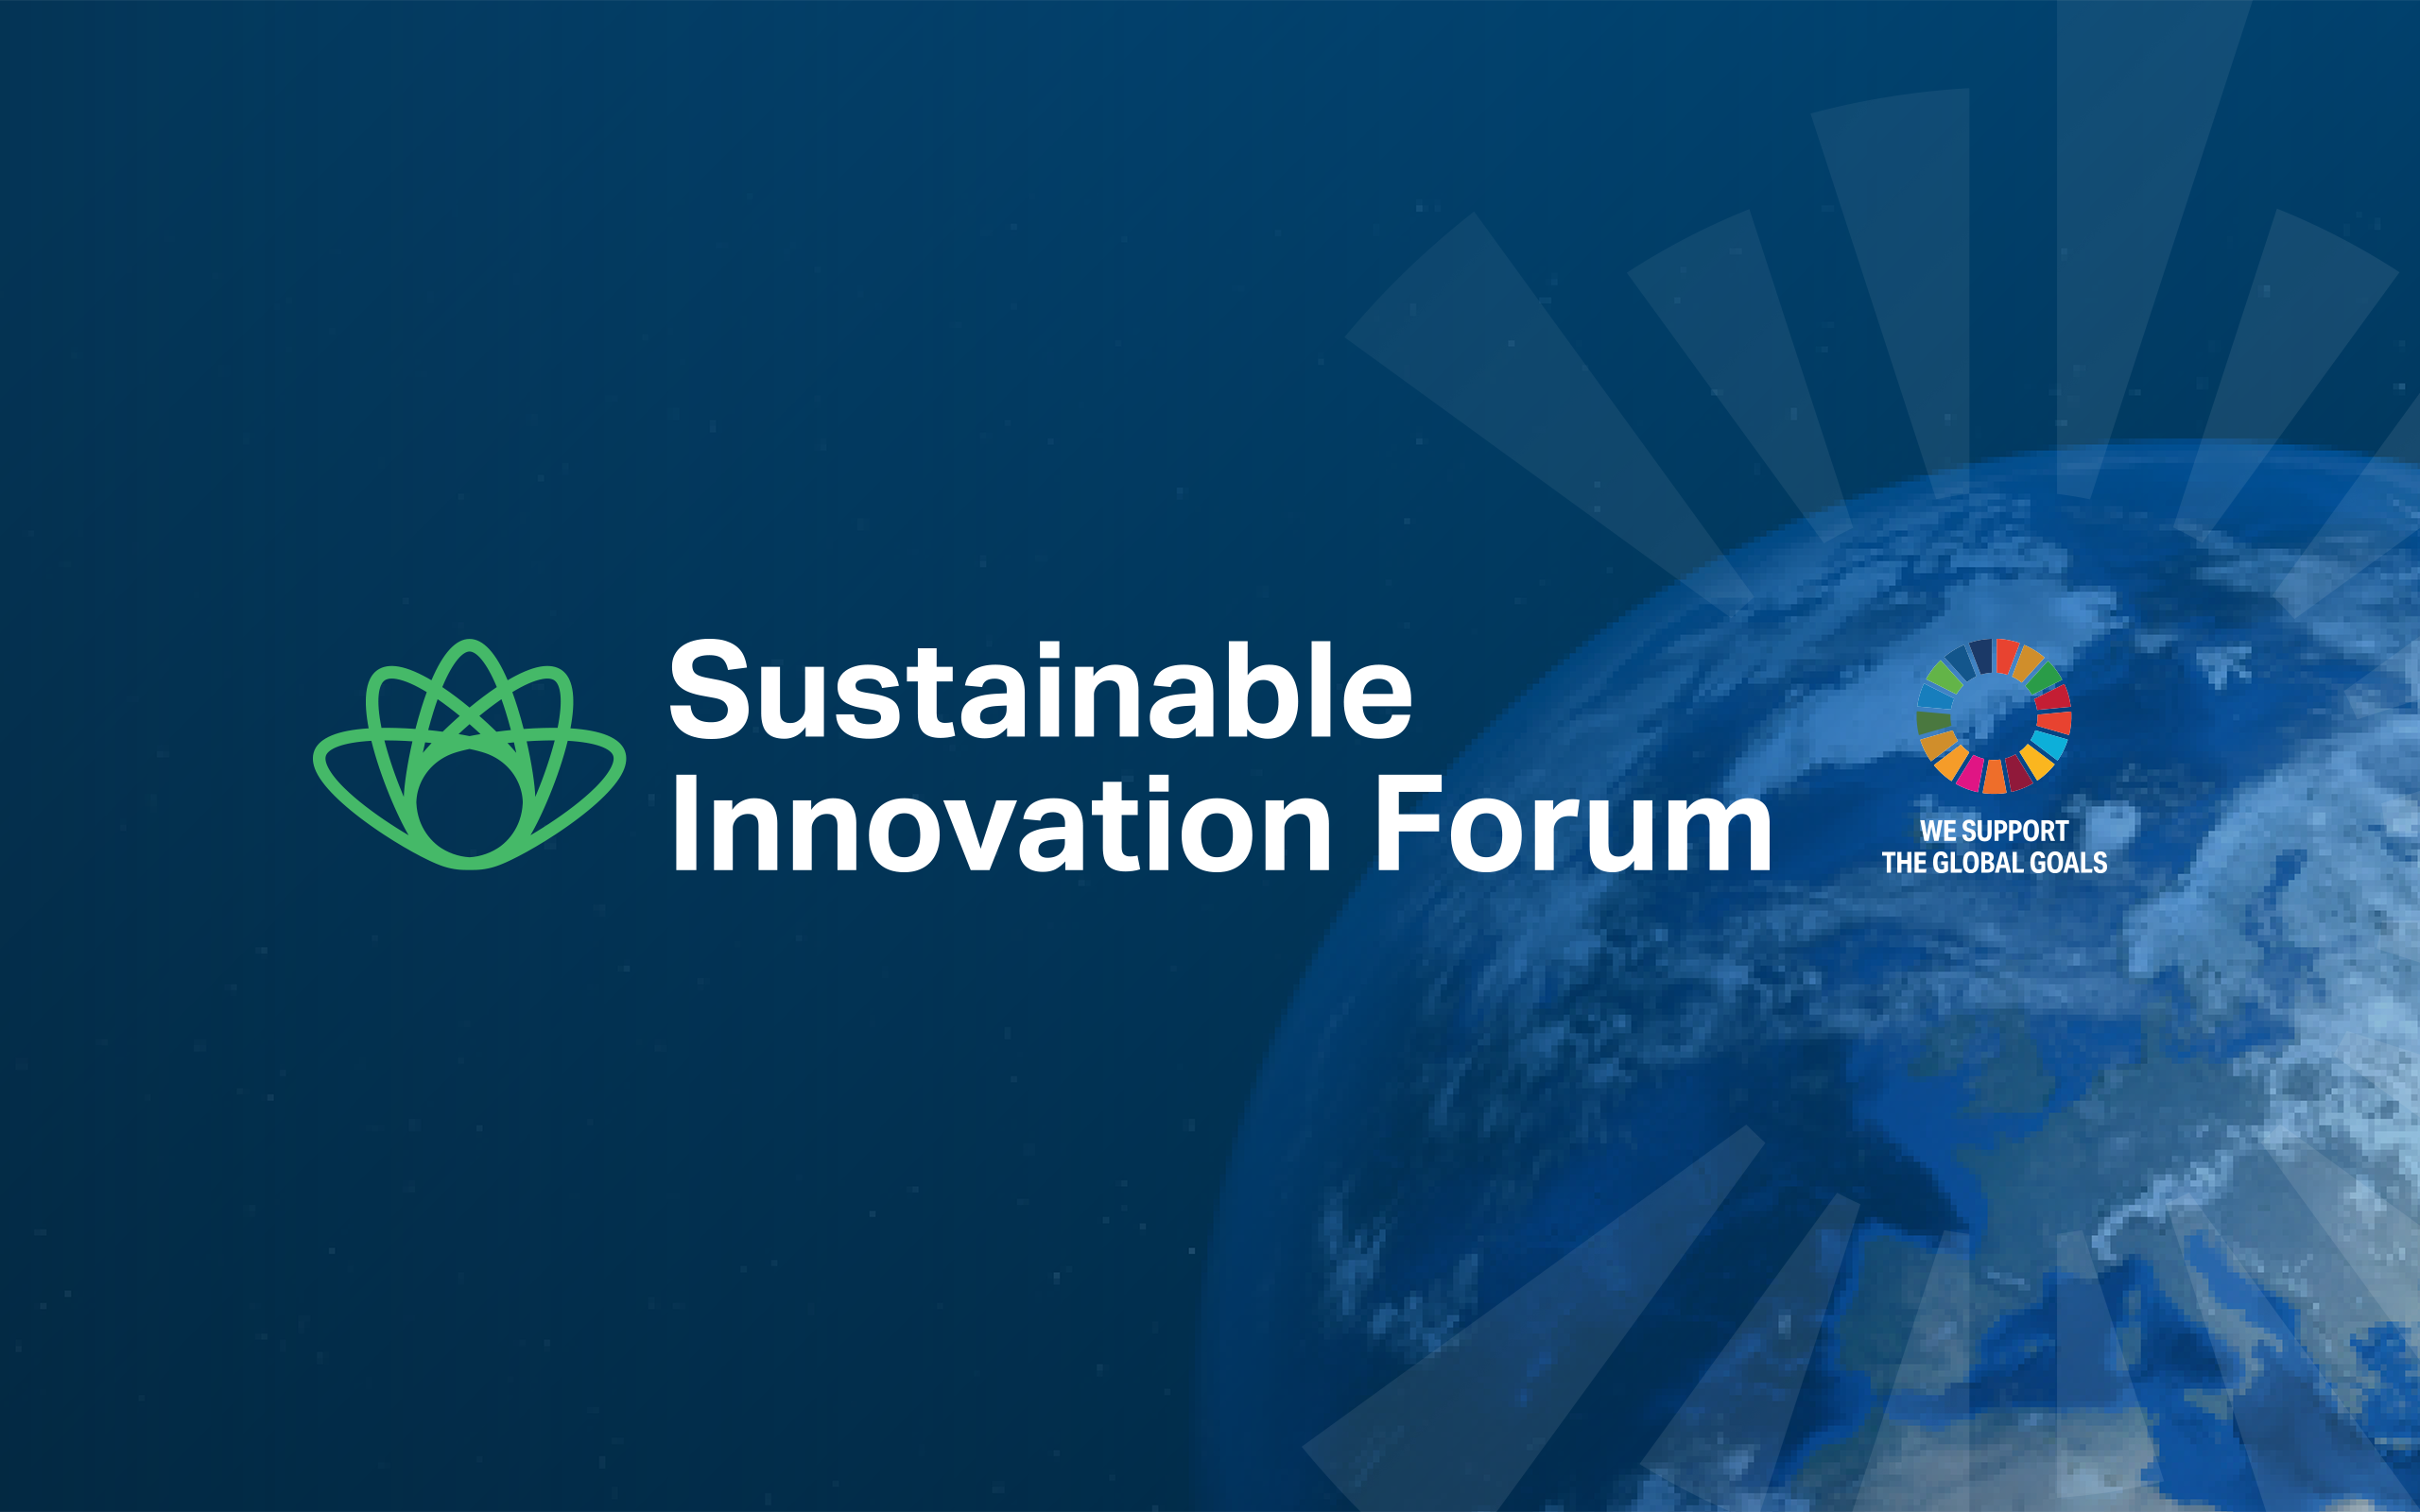 Sustainable Innovation Forum, 9-10 Nov